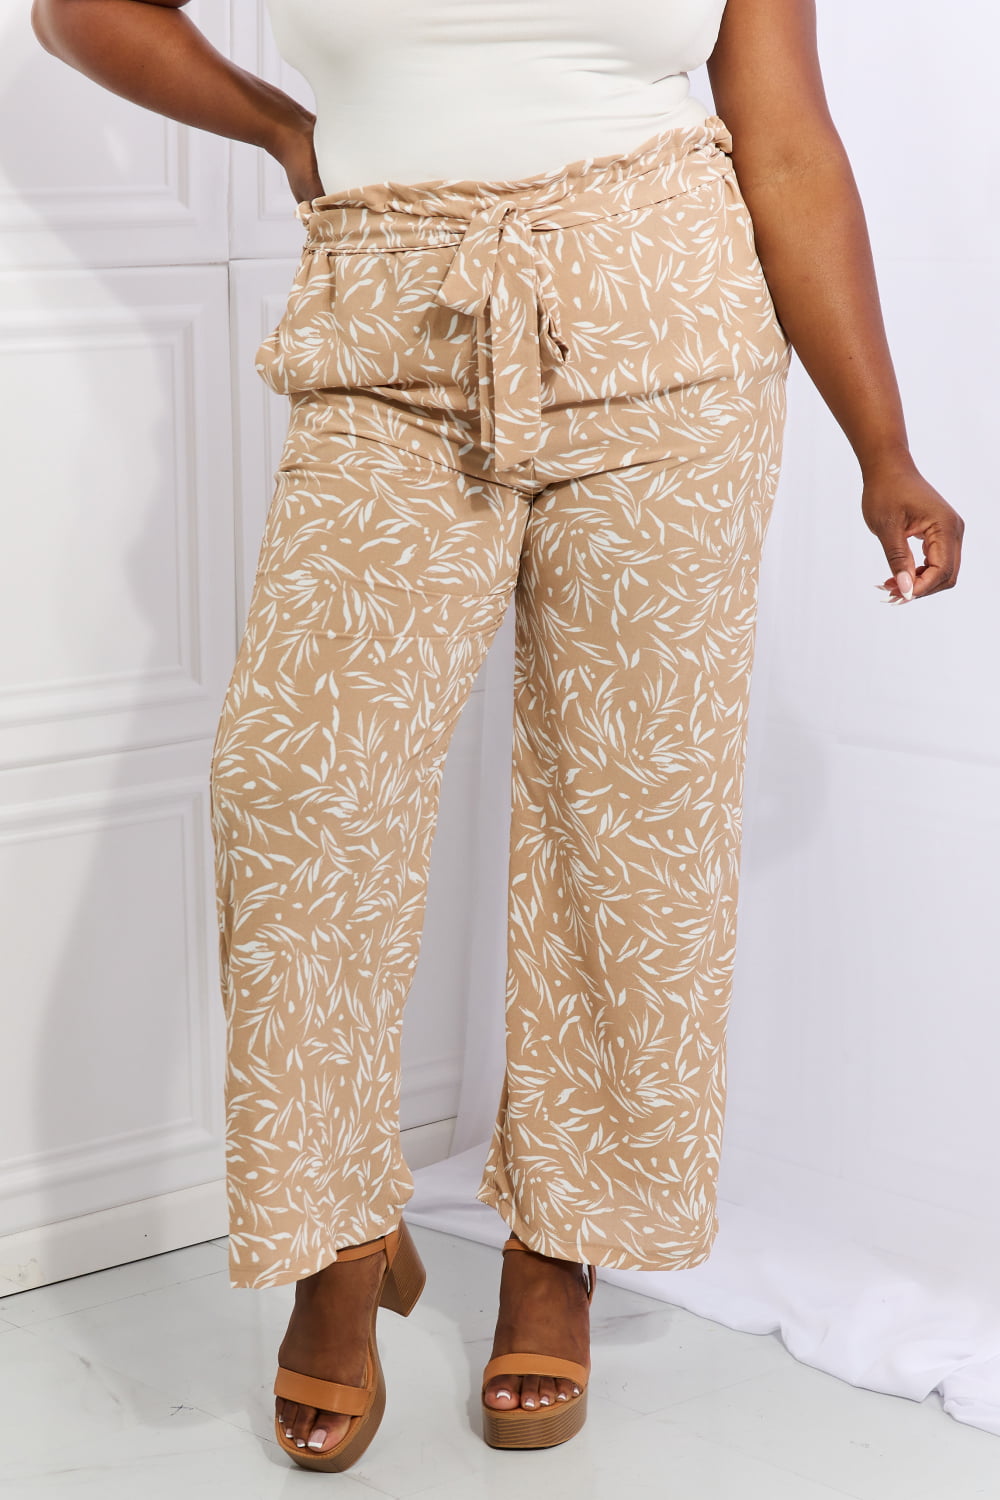 Heimish Right Angle Geometric Printed Pants in Tan